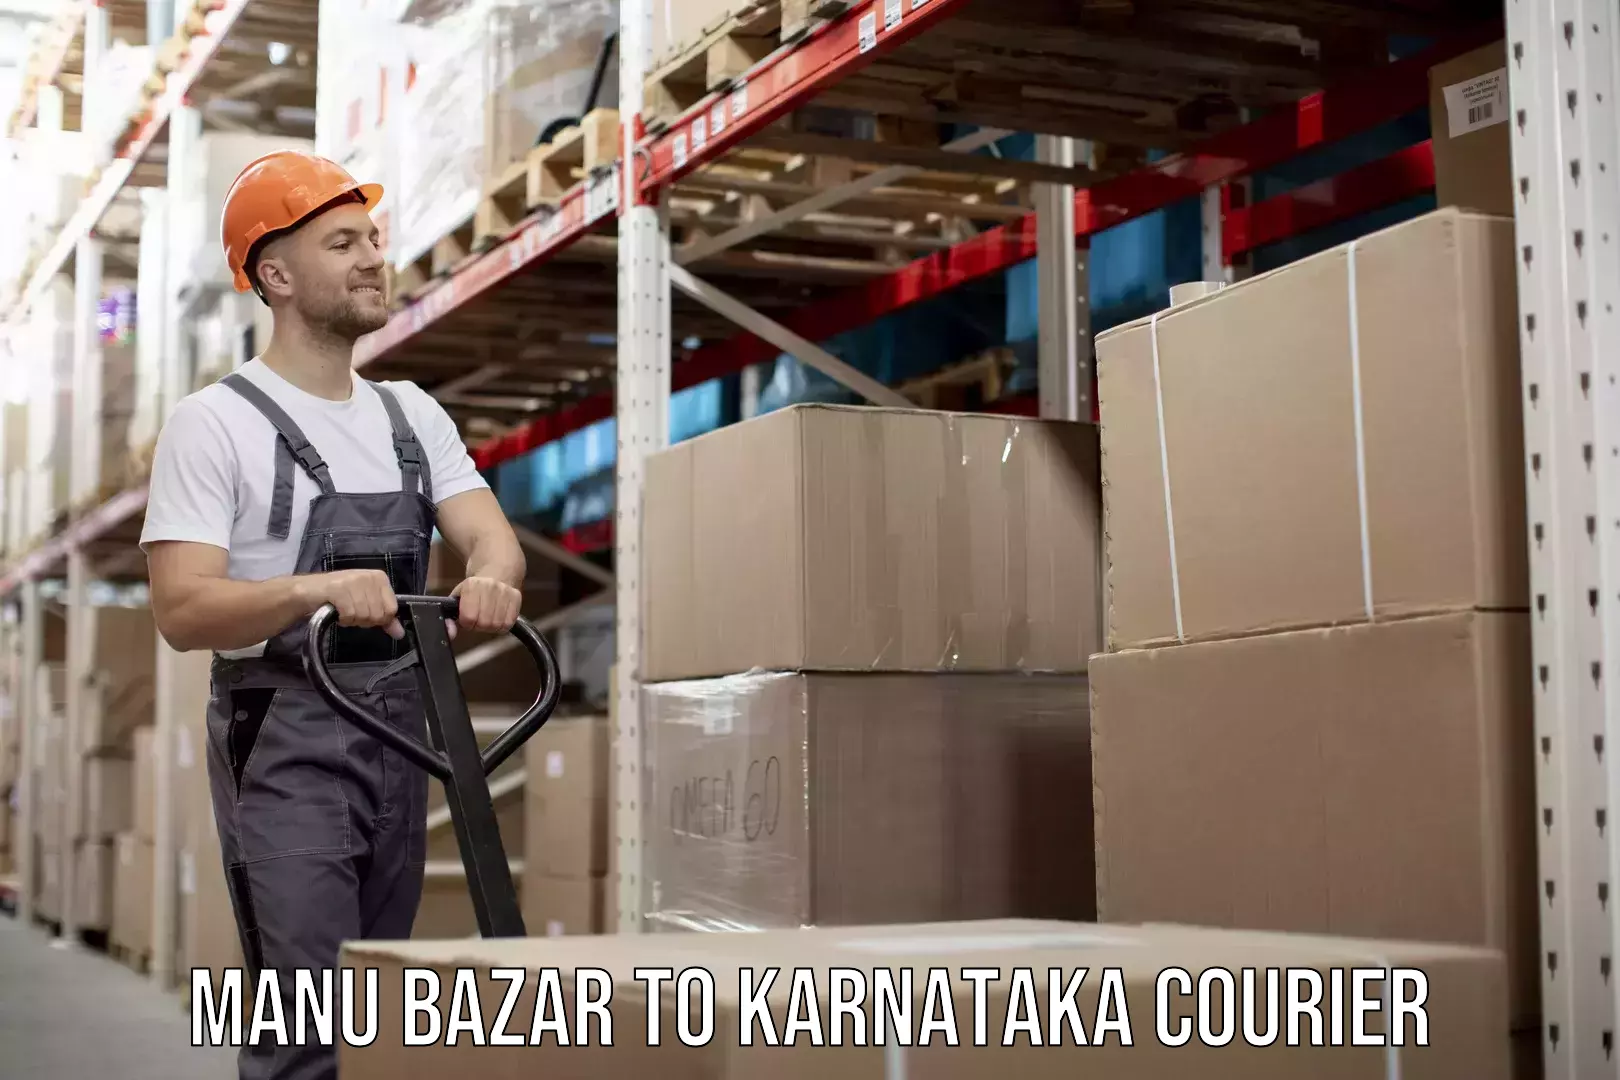 Courier service innovation Manu Bazar to Karnataka